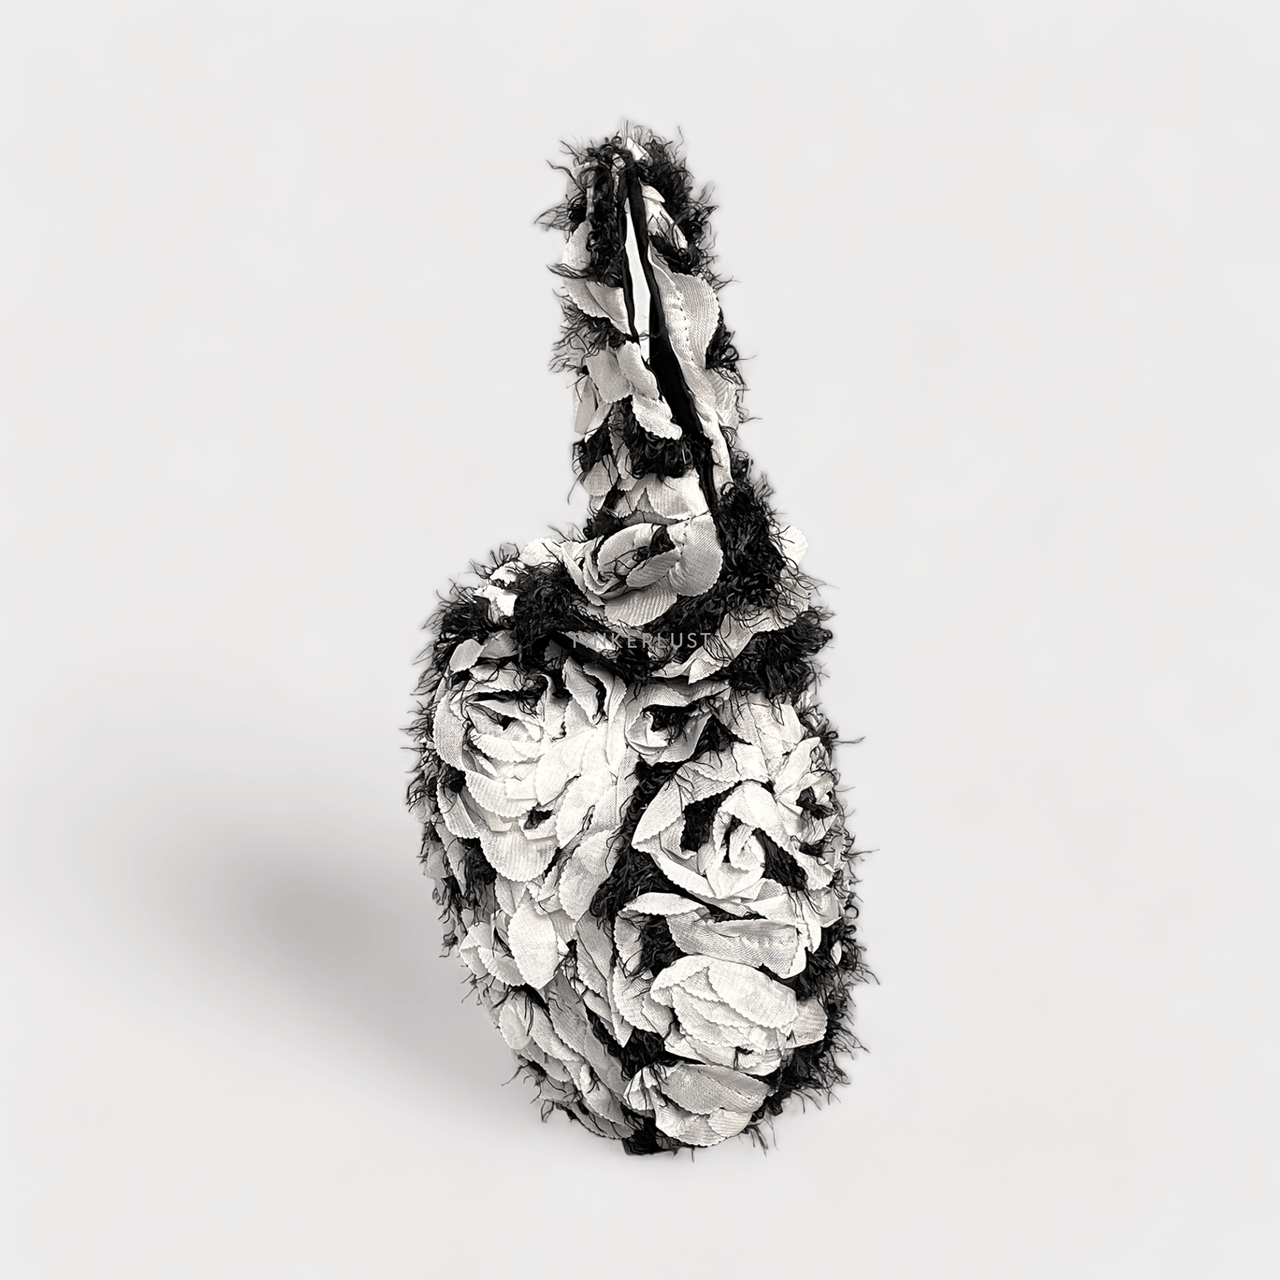 Aesthetic Pleasure Black & White Handbag